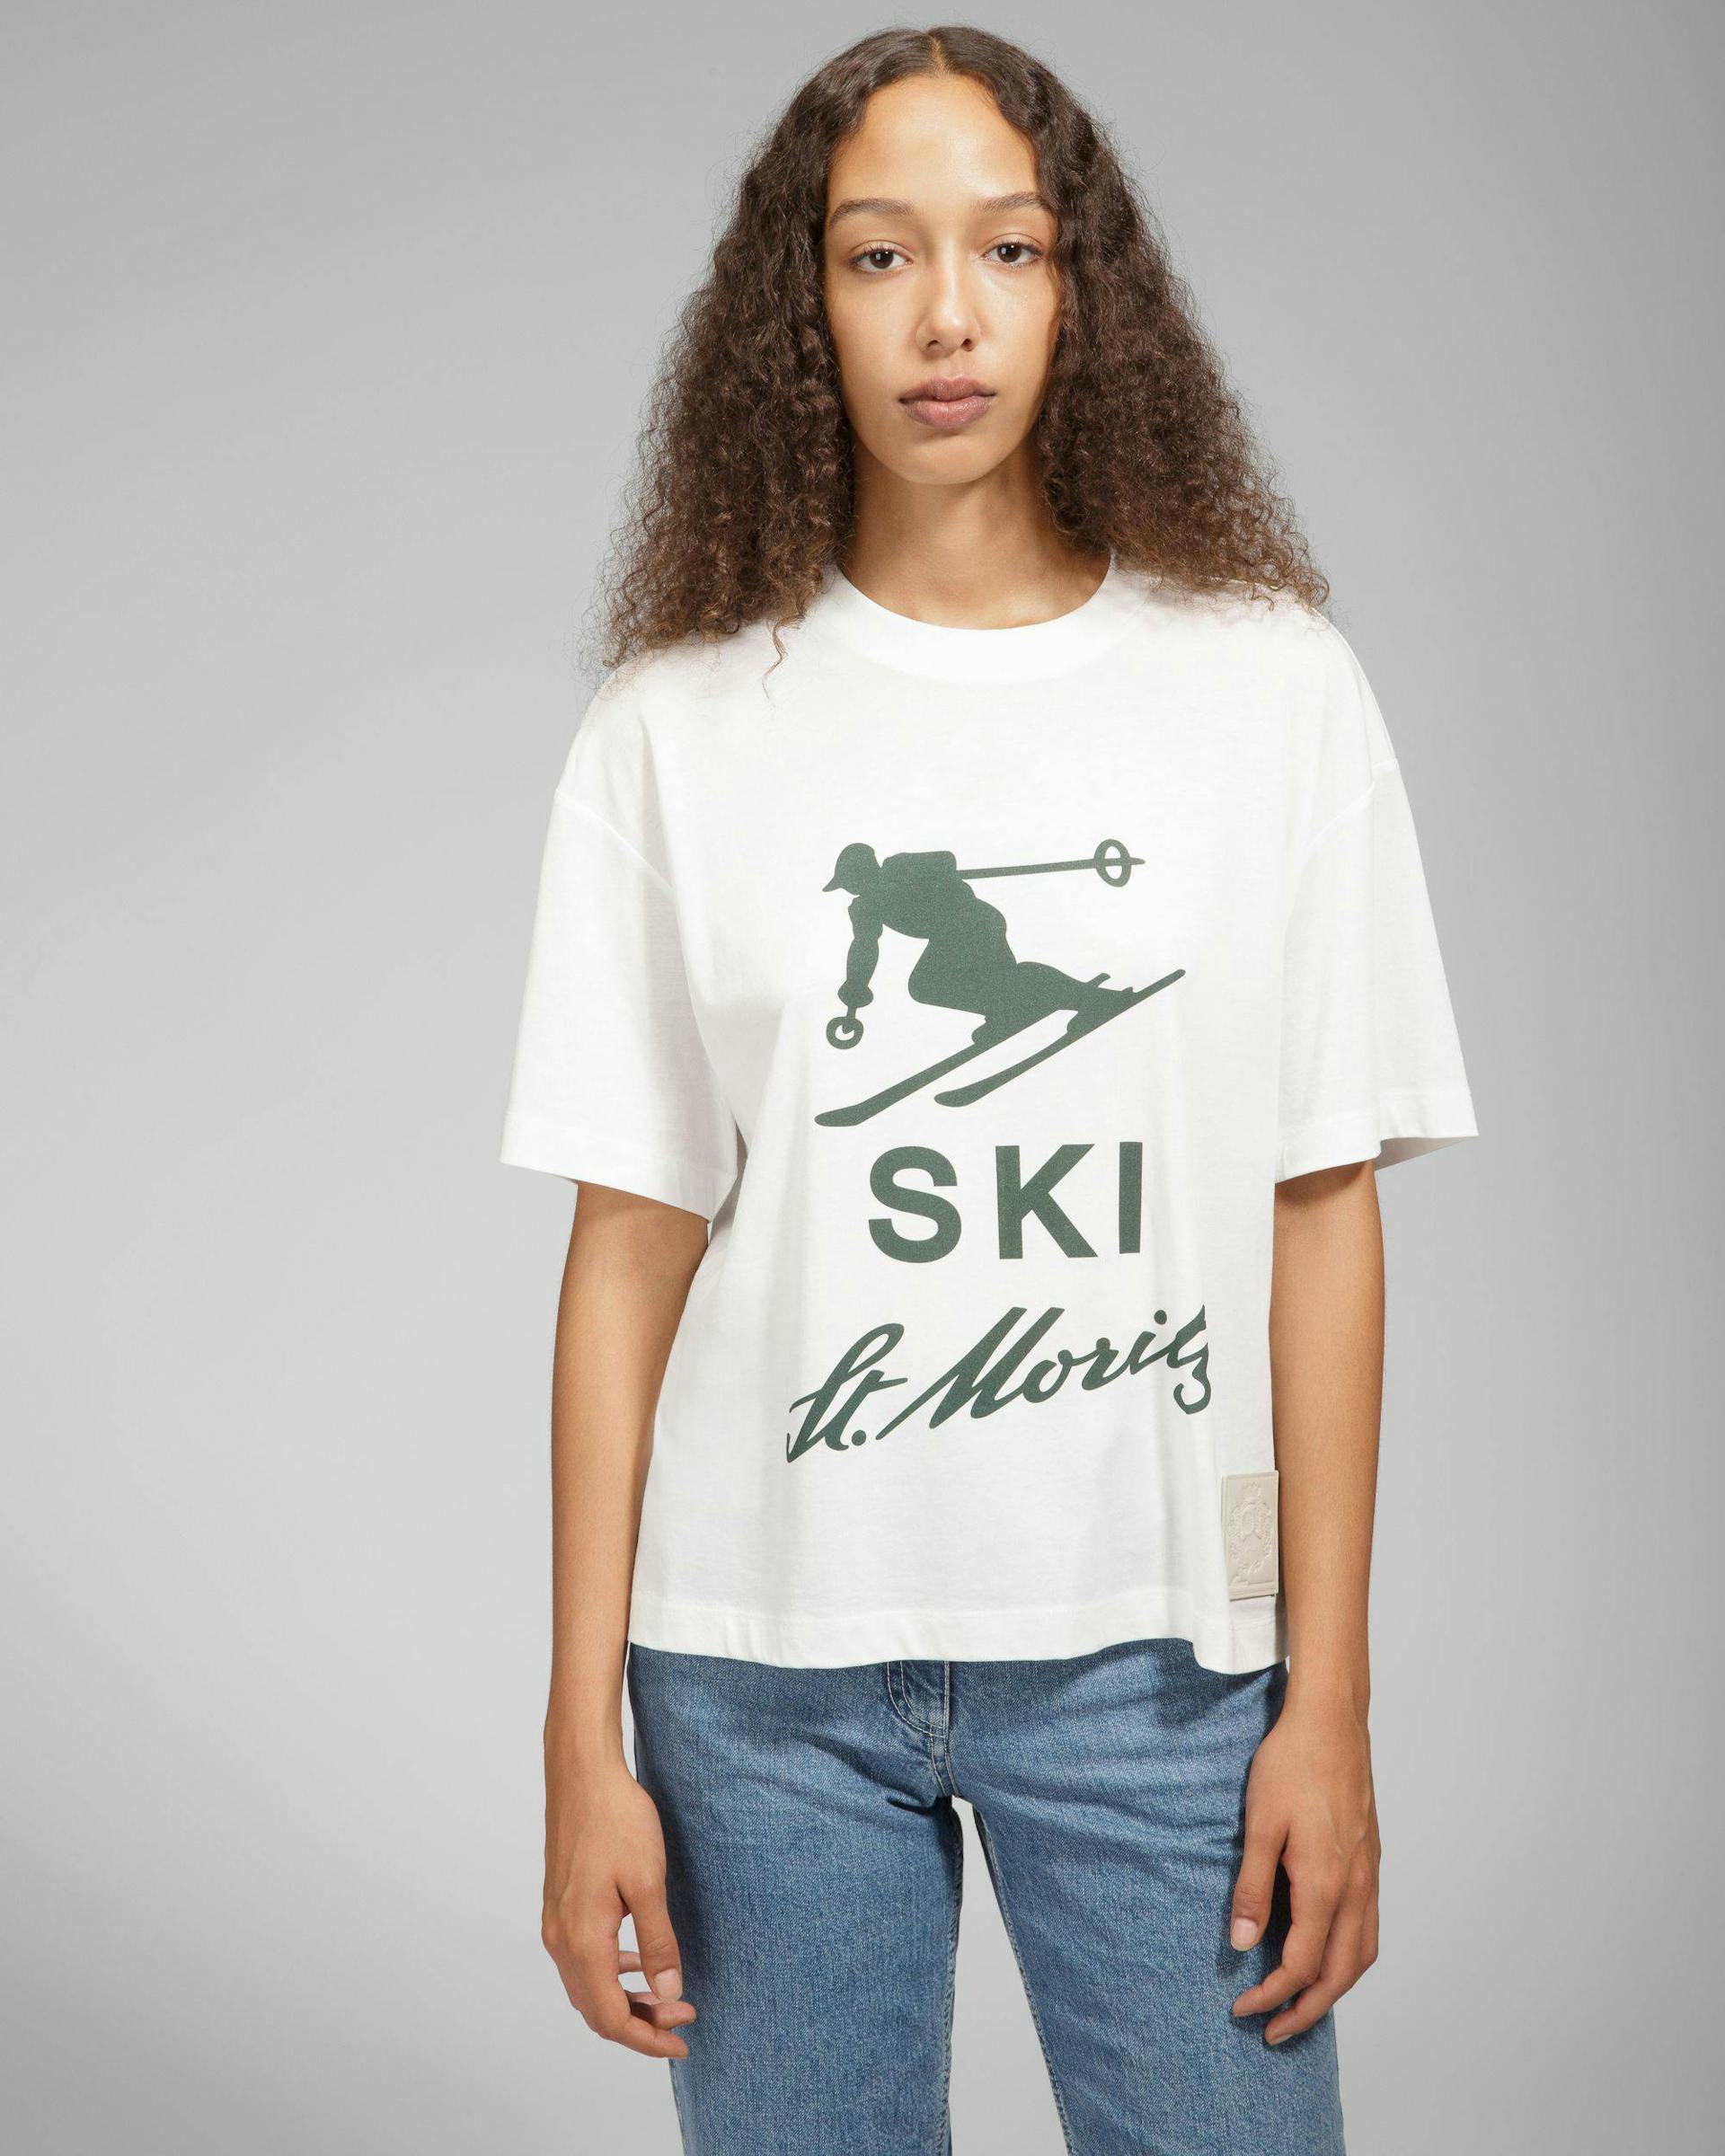 Ski St Moritz T-shirt - Bally